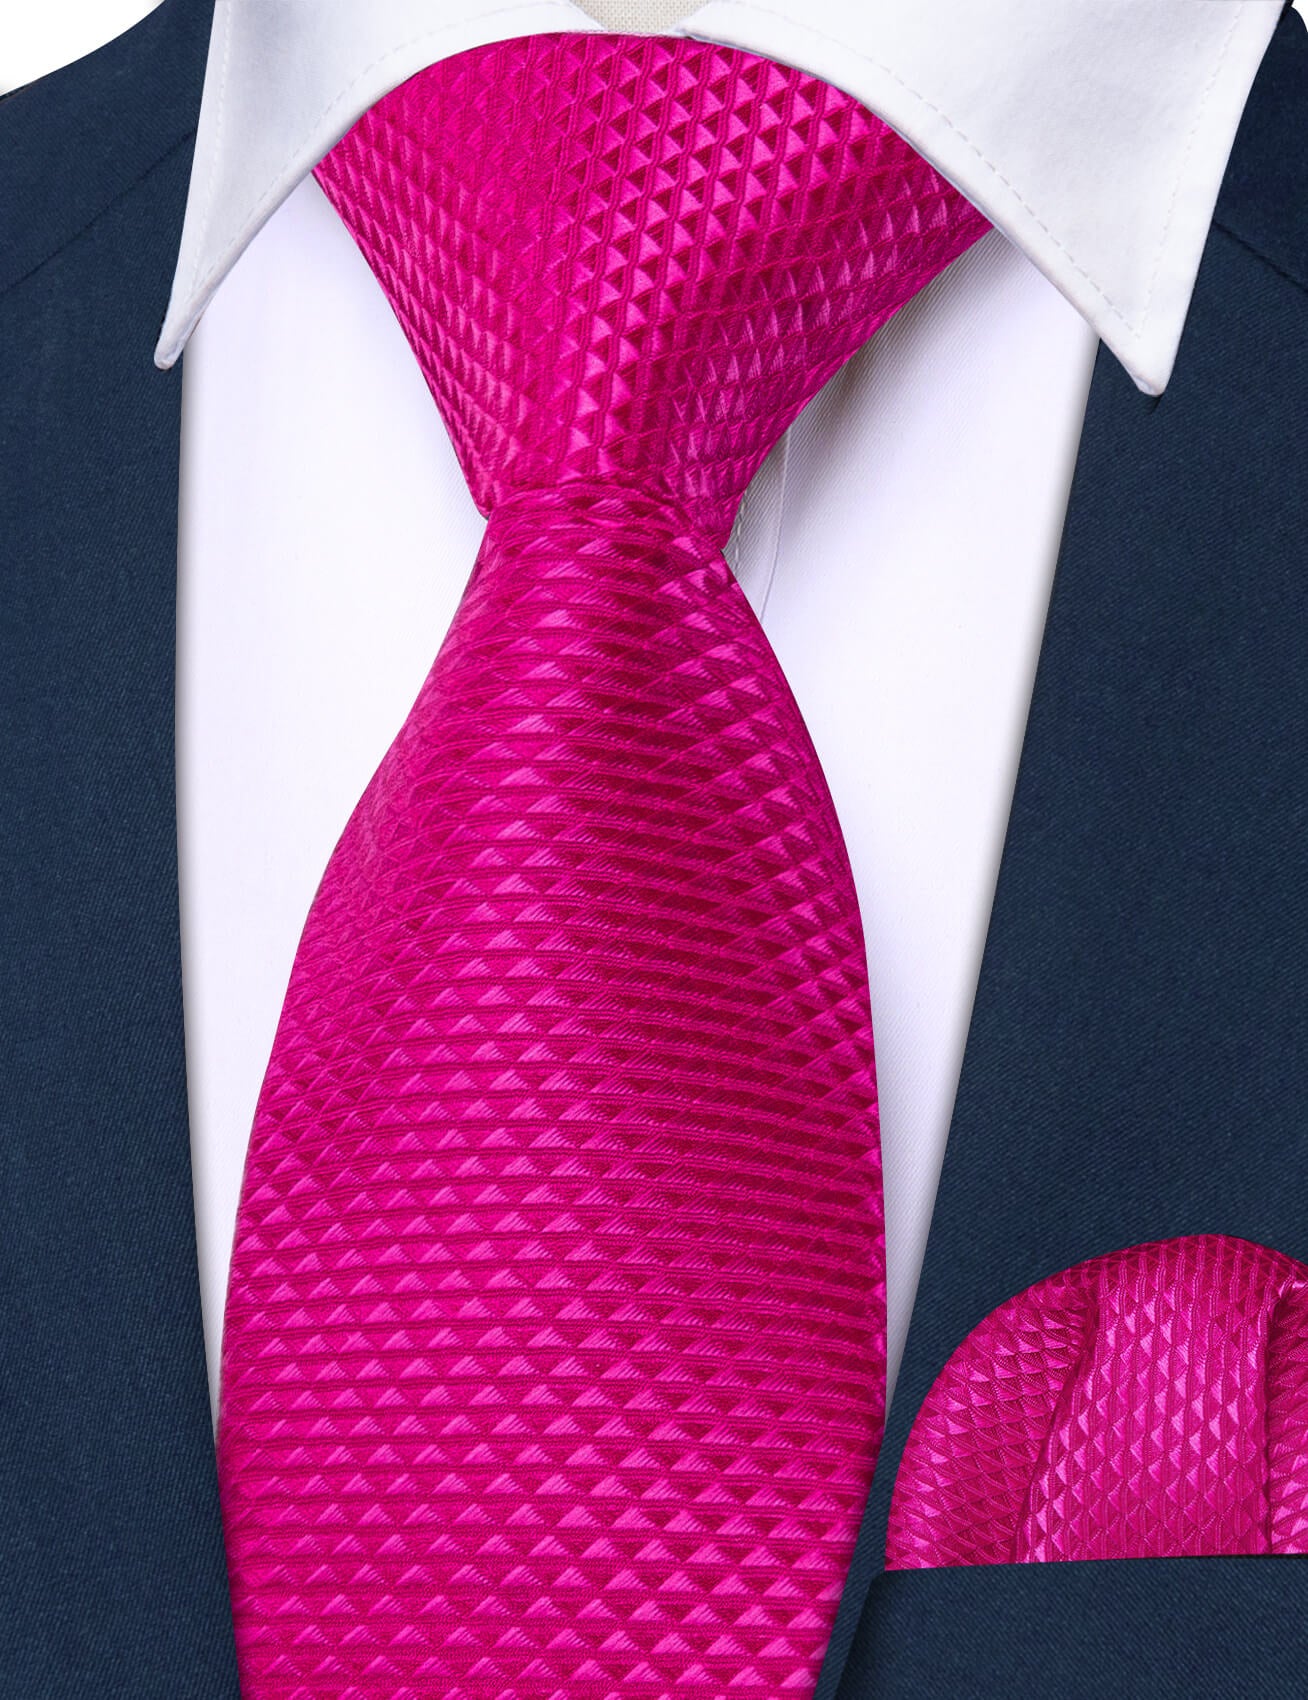 Barry.wang Kids Tie Rose Pink Solid Children's Tie Pocket Square Set